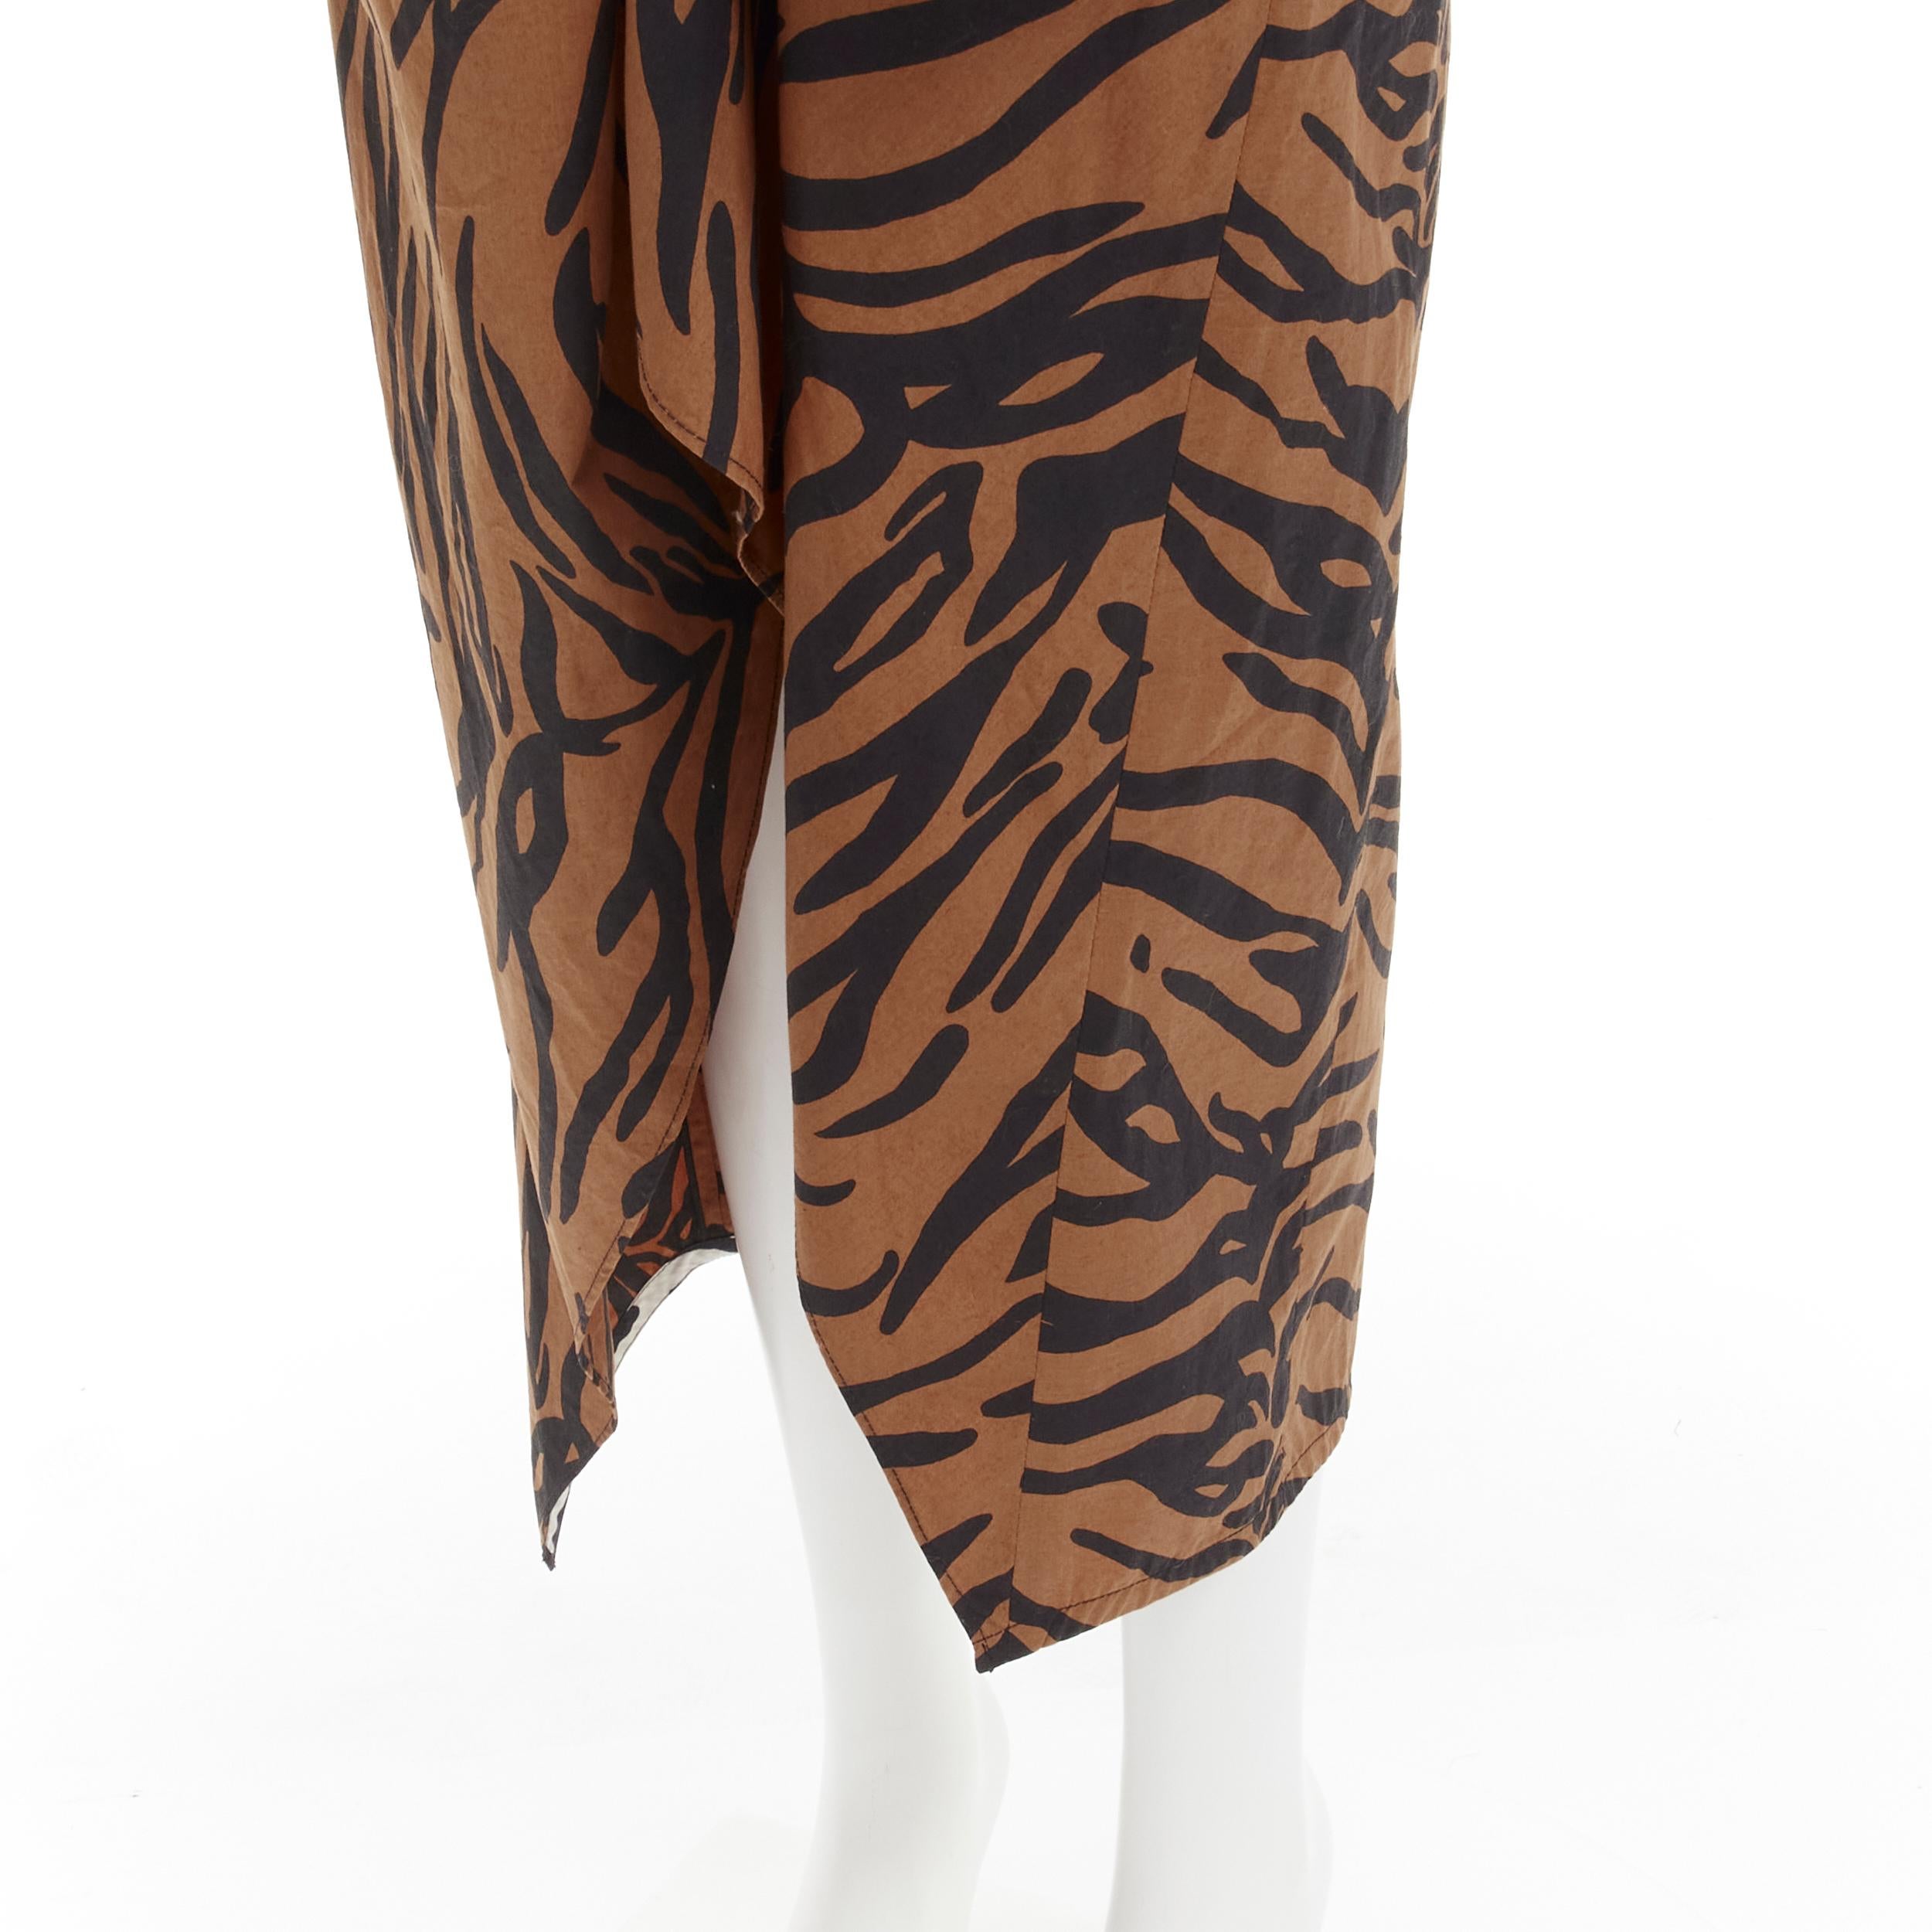 rare OLD CELINE Phoebe Philo 2016 Runway brown tiger twist bow dress FR34 XS 3